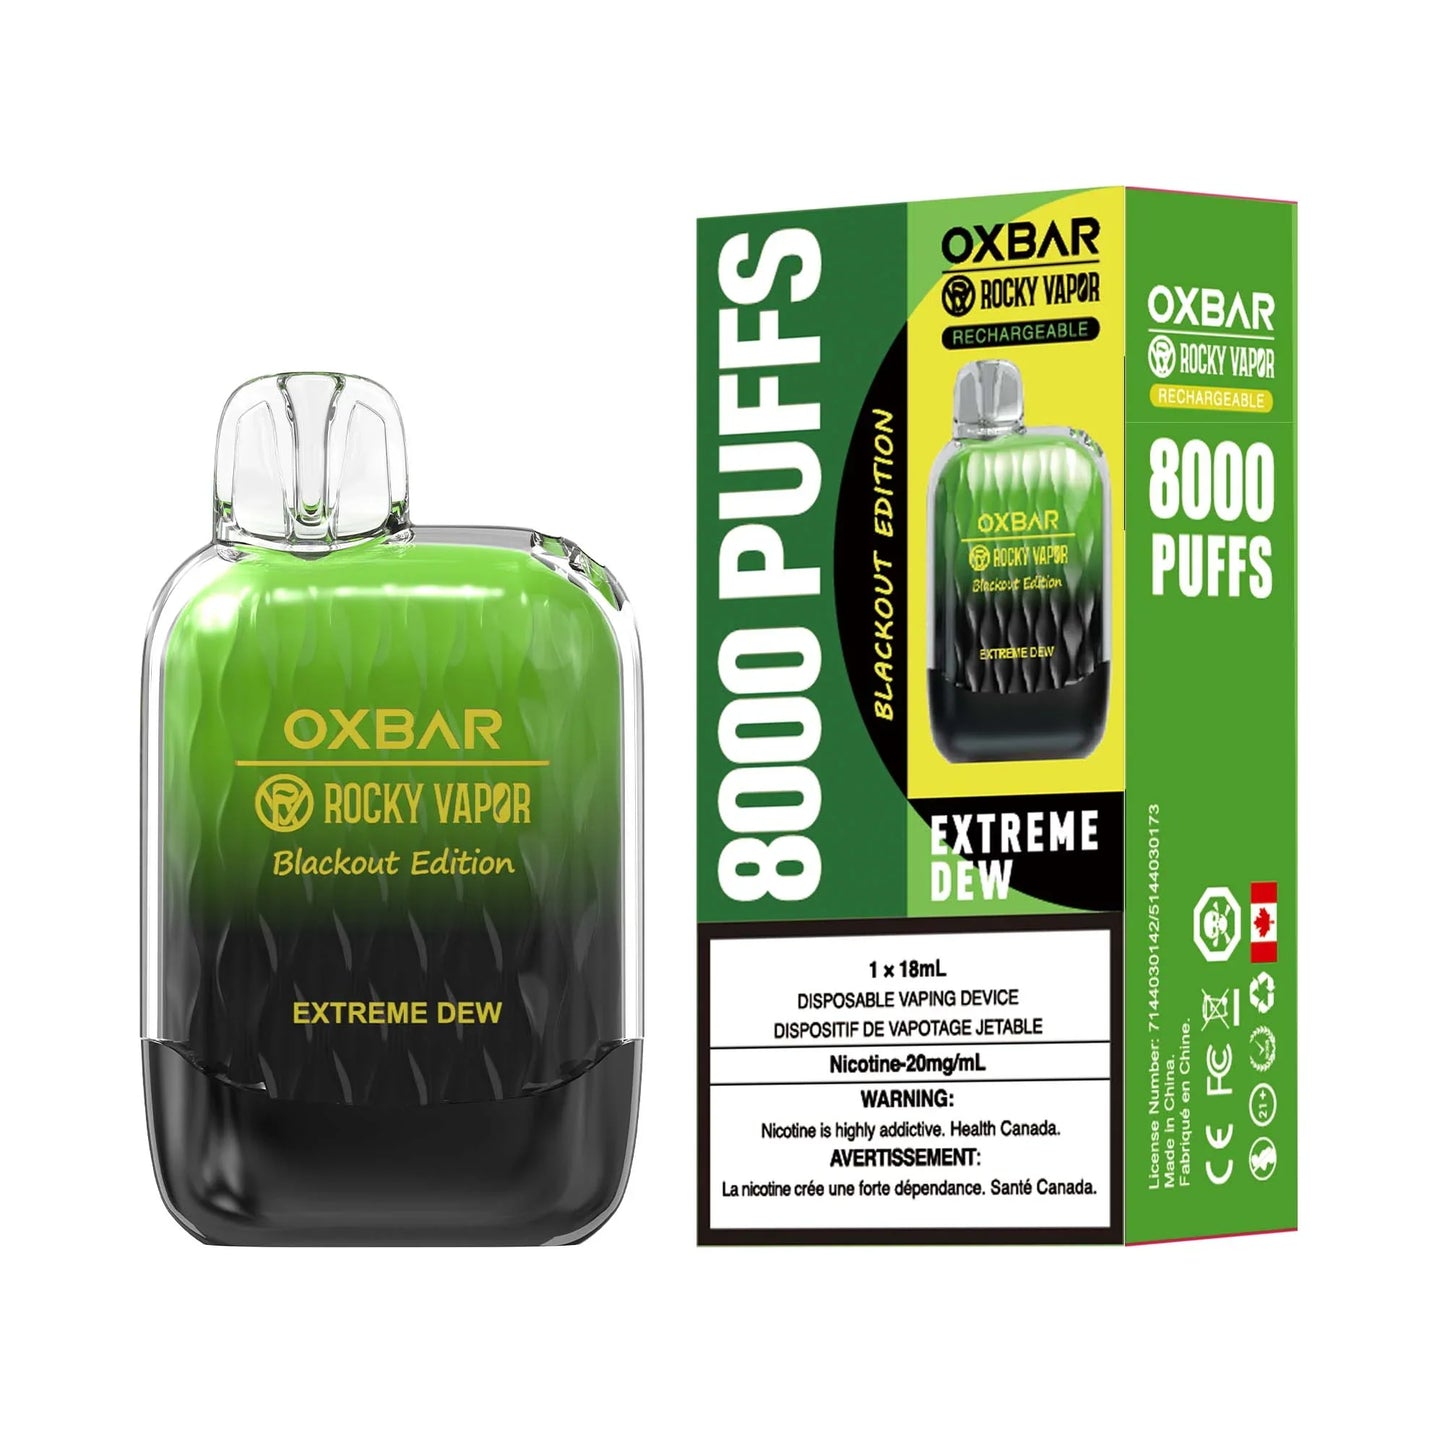 OXBAR - G8000 (Promotion)